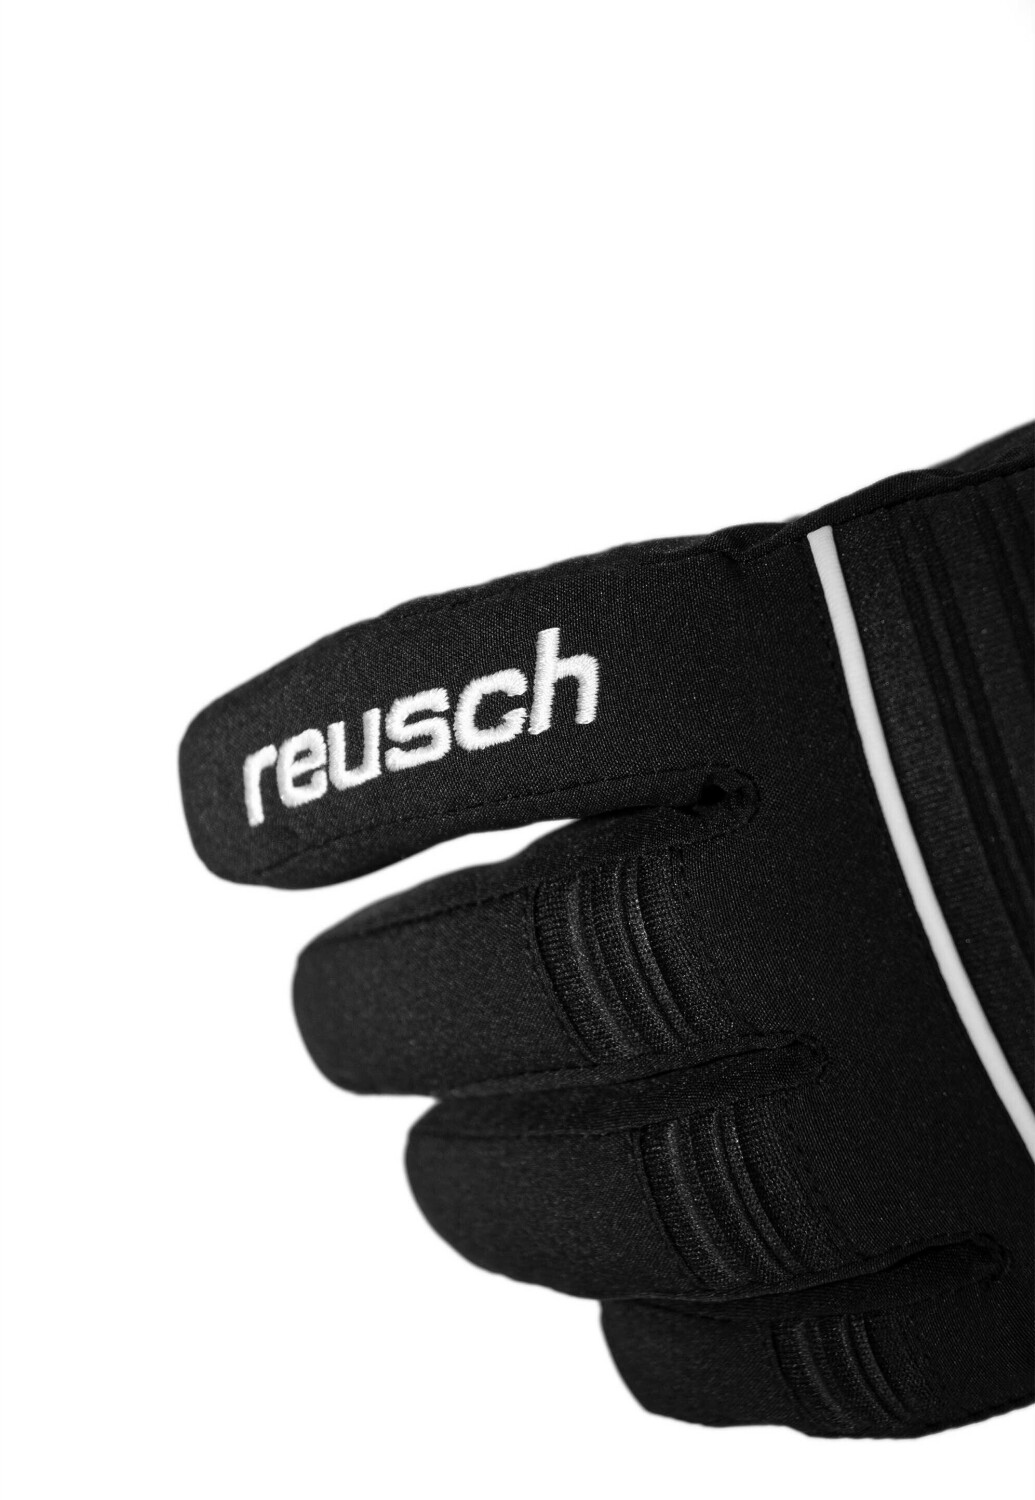 Reusch Kondor R-tex Preisvergleich 27,90 Junior (6361218) | bei black/white XT ab €